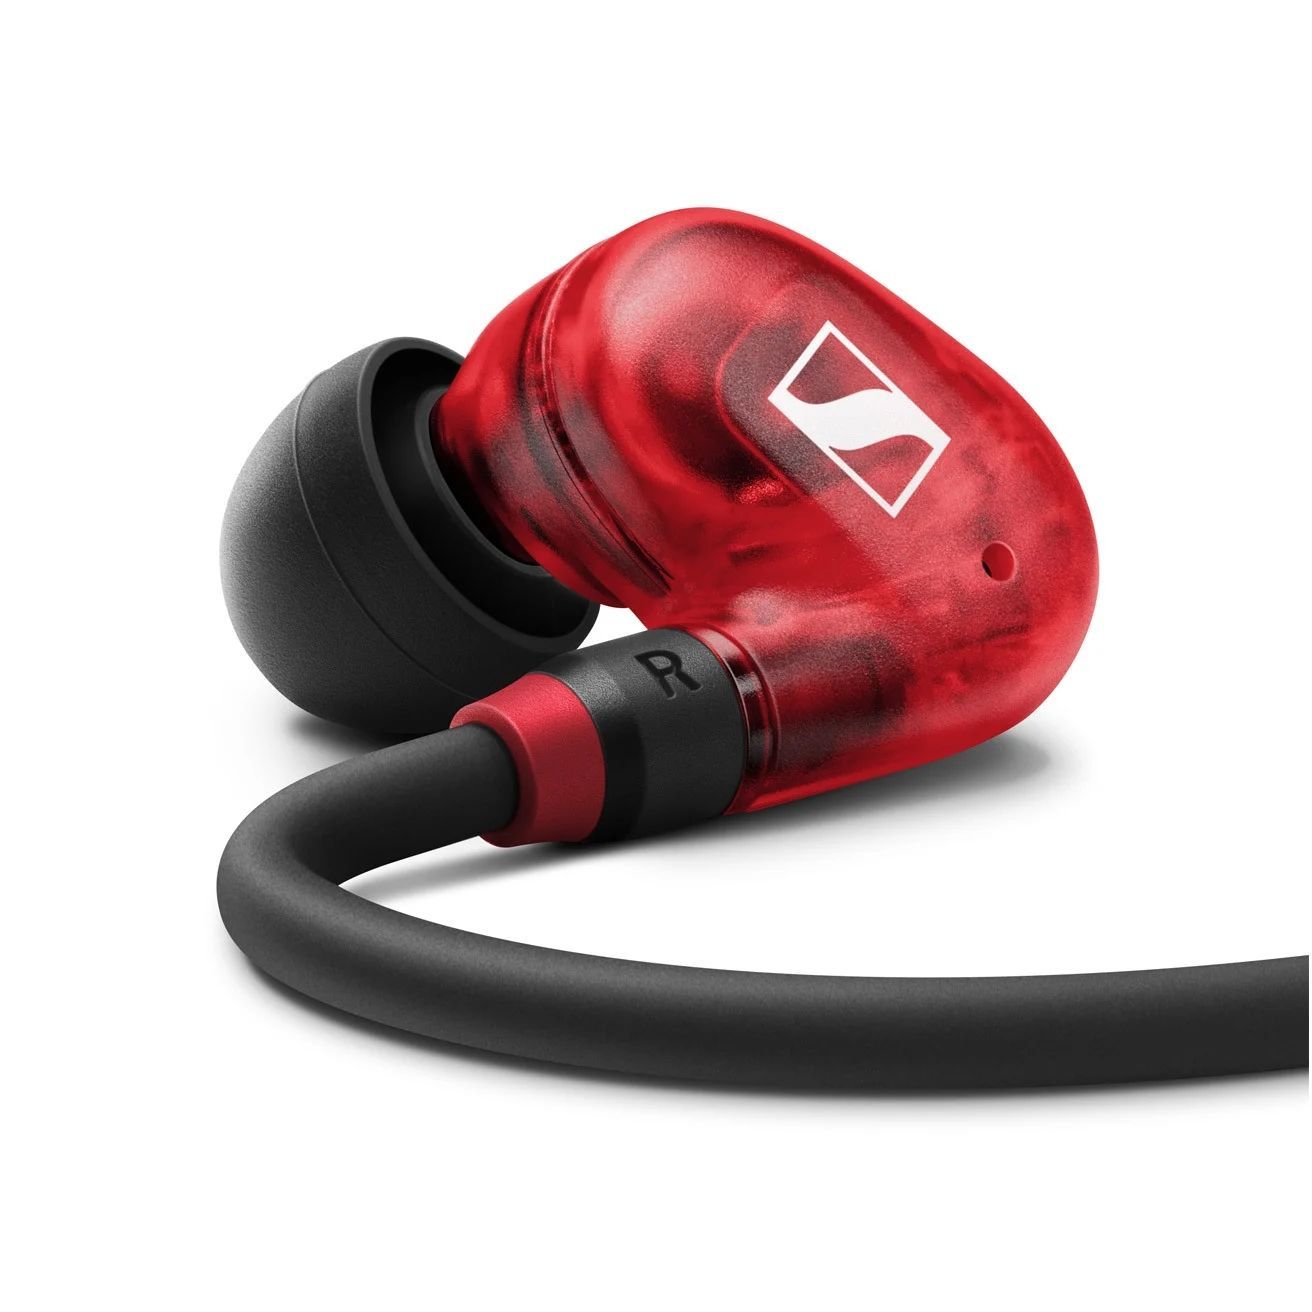 Sennheiser IE 100 Pro Red Dynamische In-Ear-Monitoring-Hörer Farbe: rot